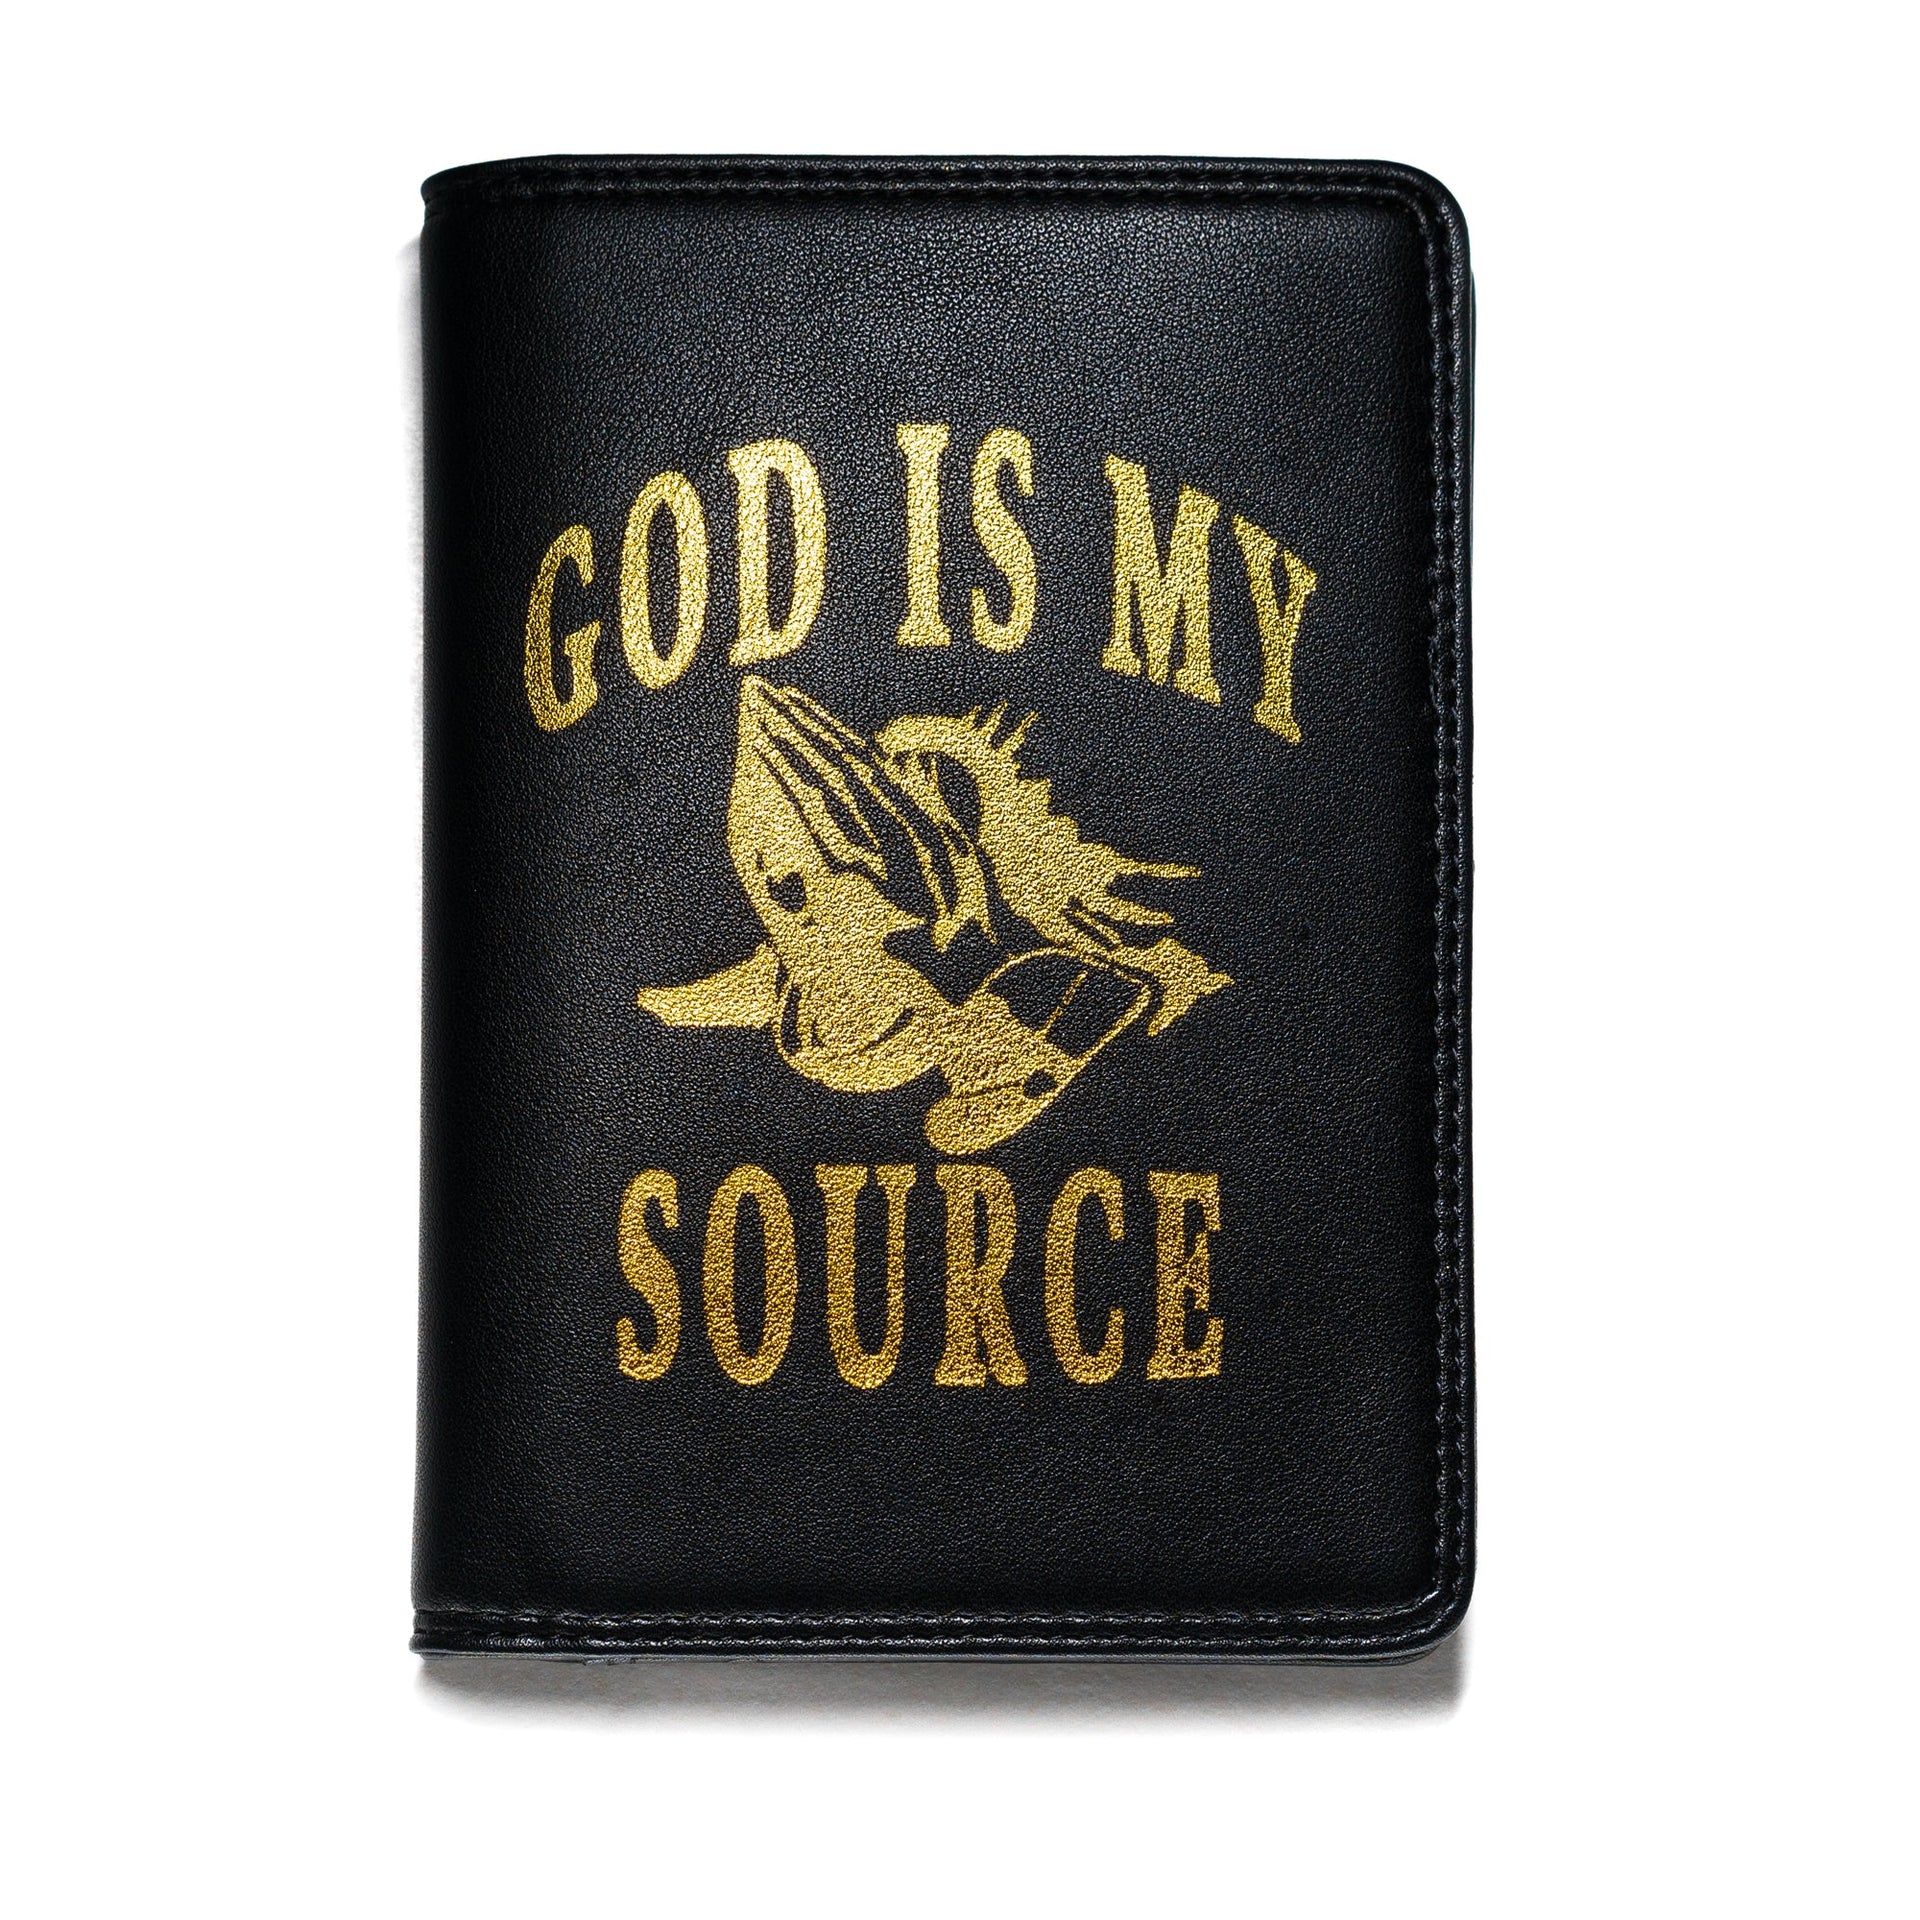 God Is My Source - Passport Wallet - Black / Gold - God Is My Source